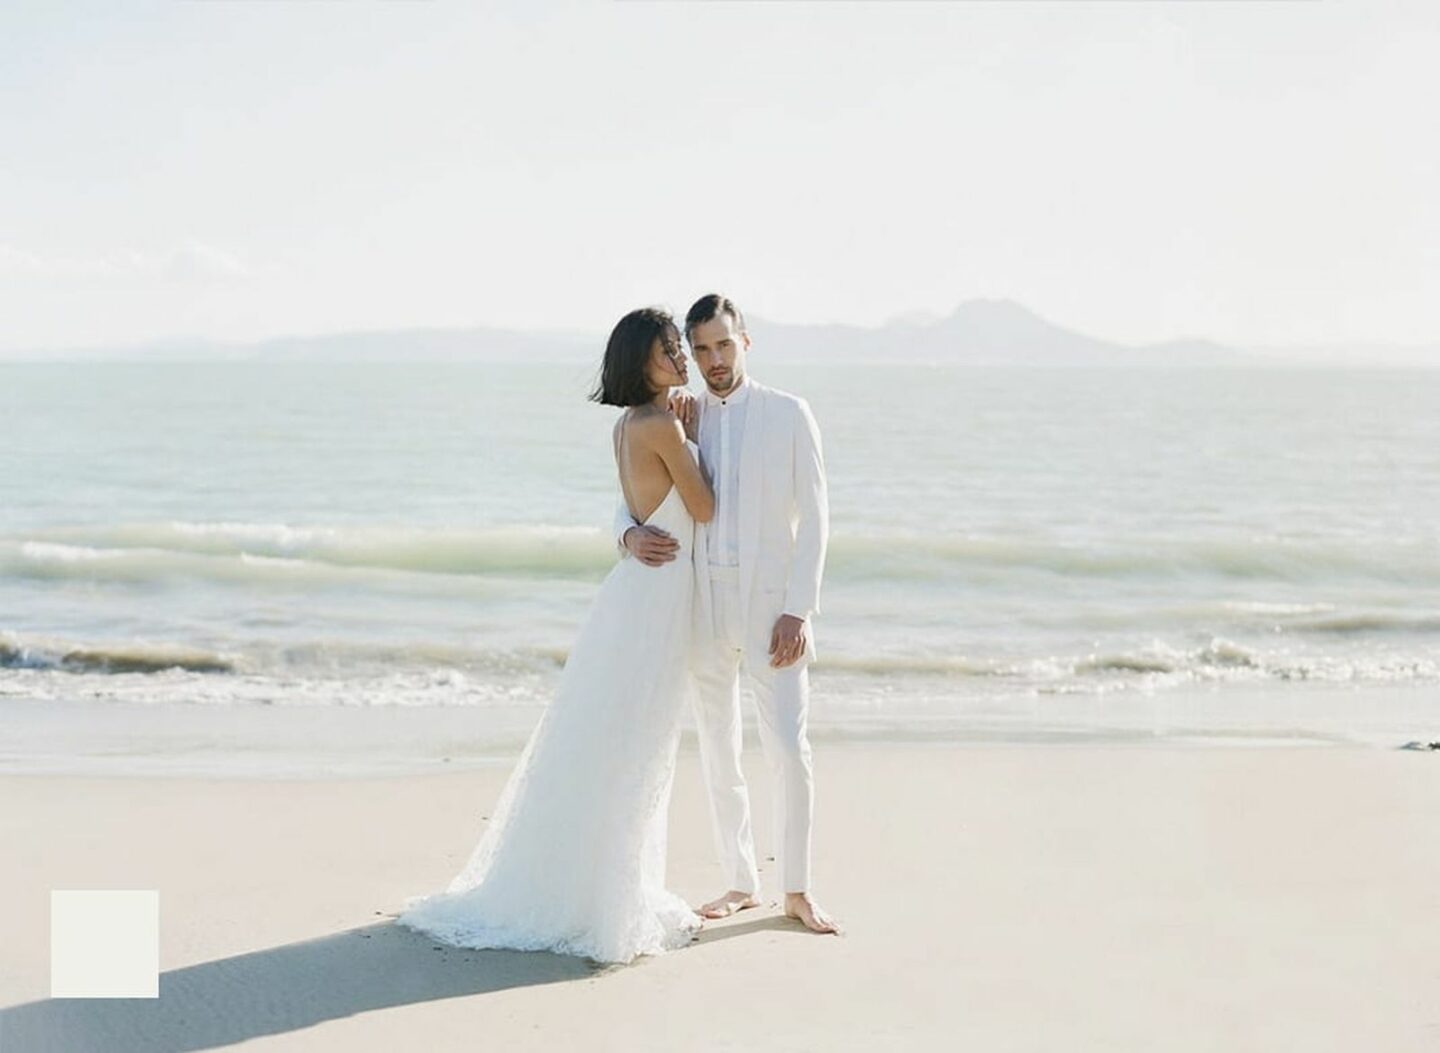 Albe Editions - Blog mariage - Wedding - violet et jaune - inspirations et conseils 